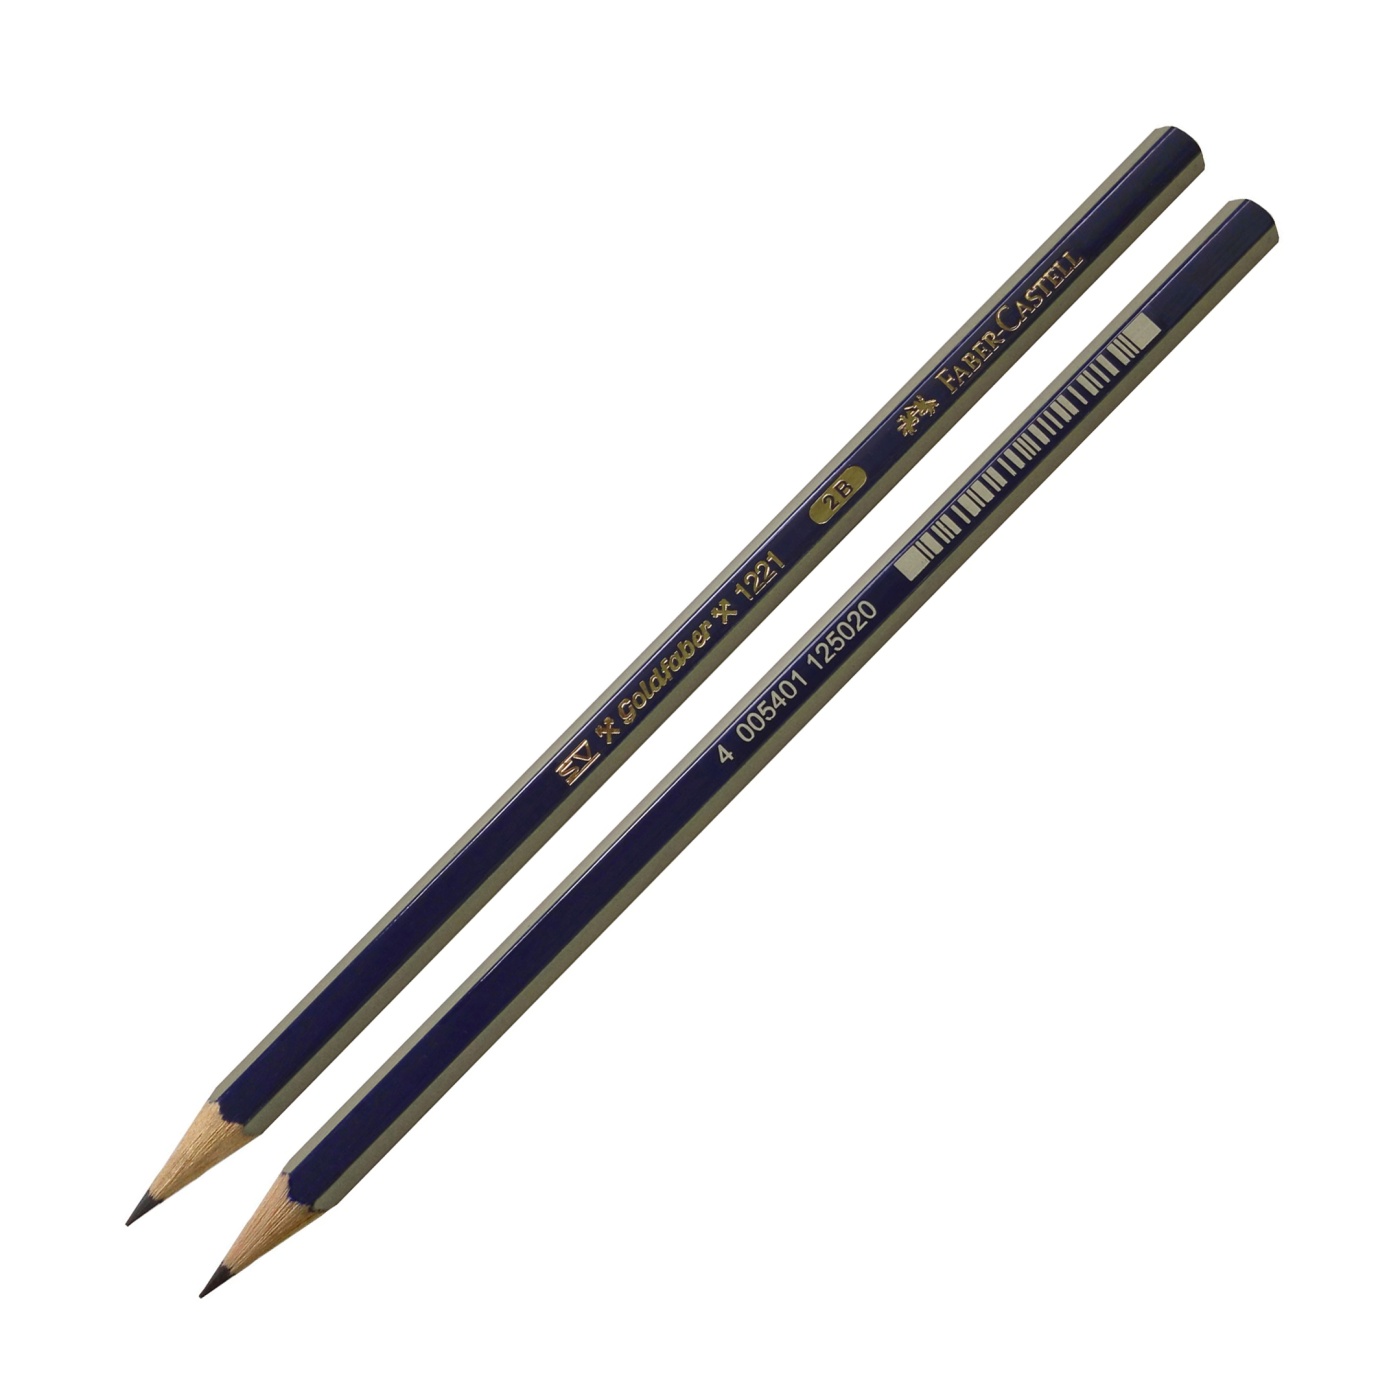 KOH-I-NOOR 2B Sudoku Graphite Pencil with Eraser Pack of 3